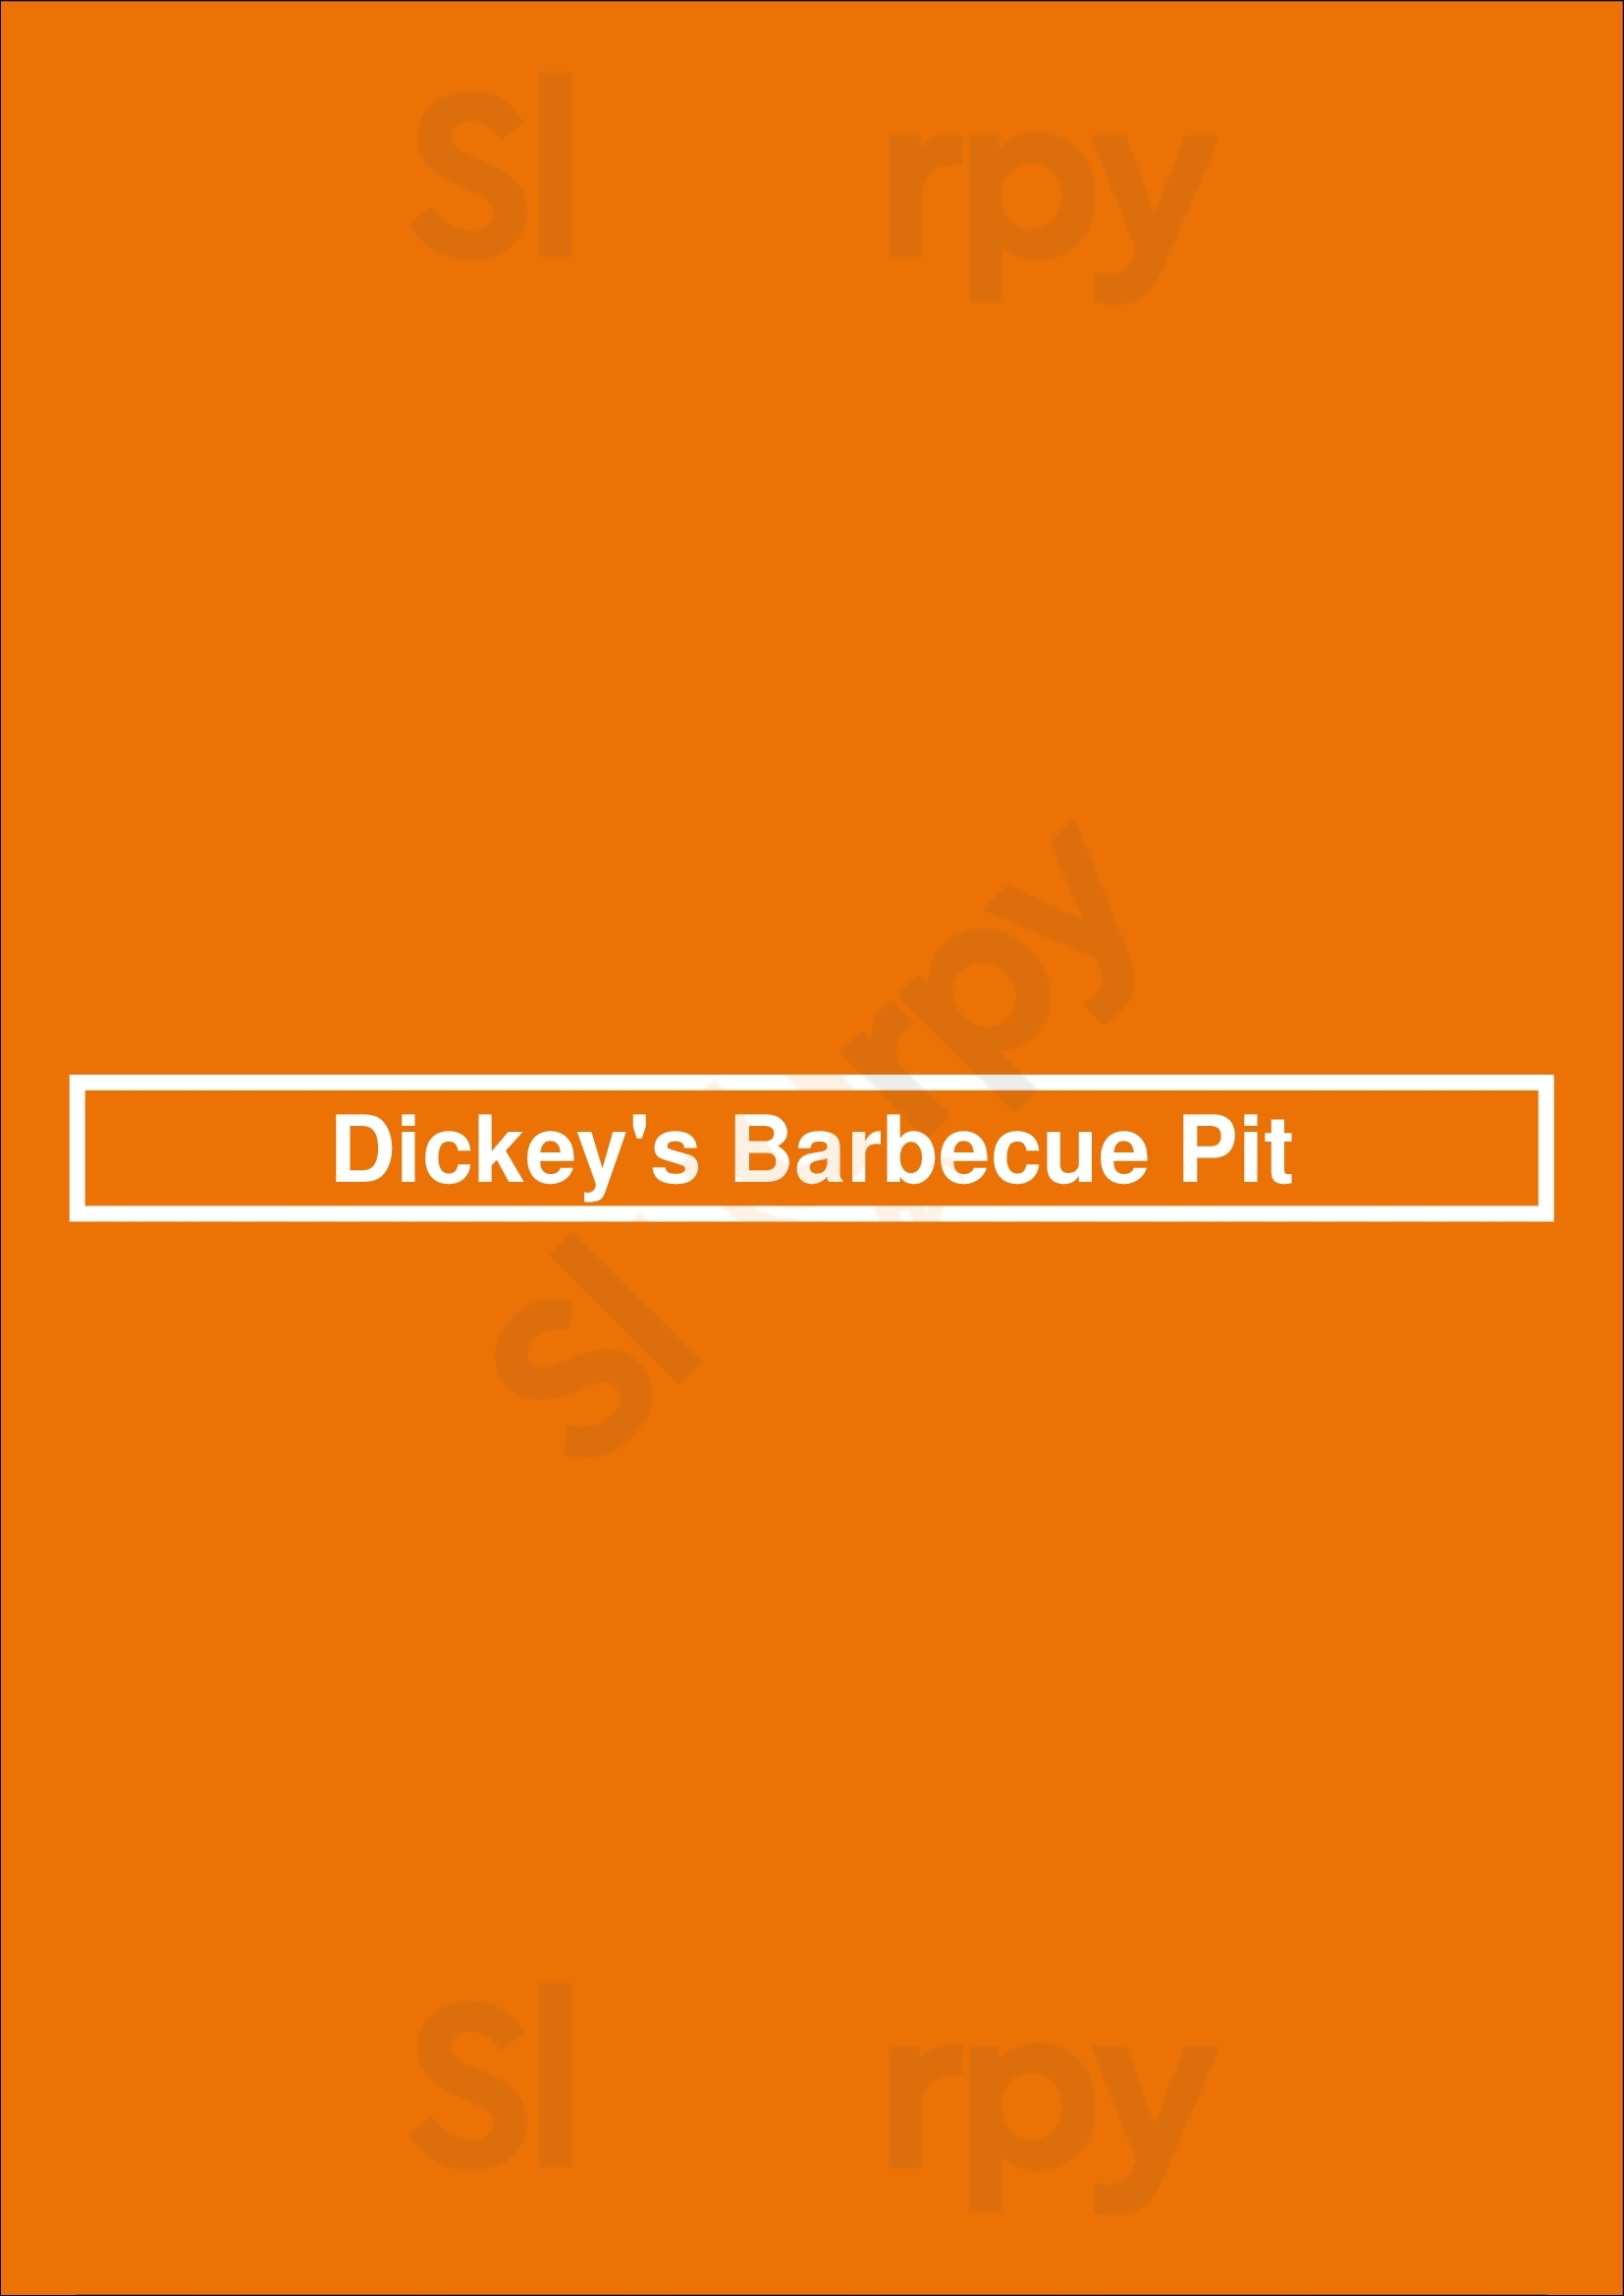 Dickey's Barbecue Pit Lexington Menu - 1